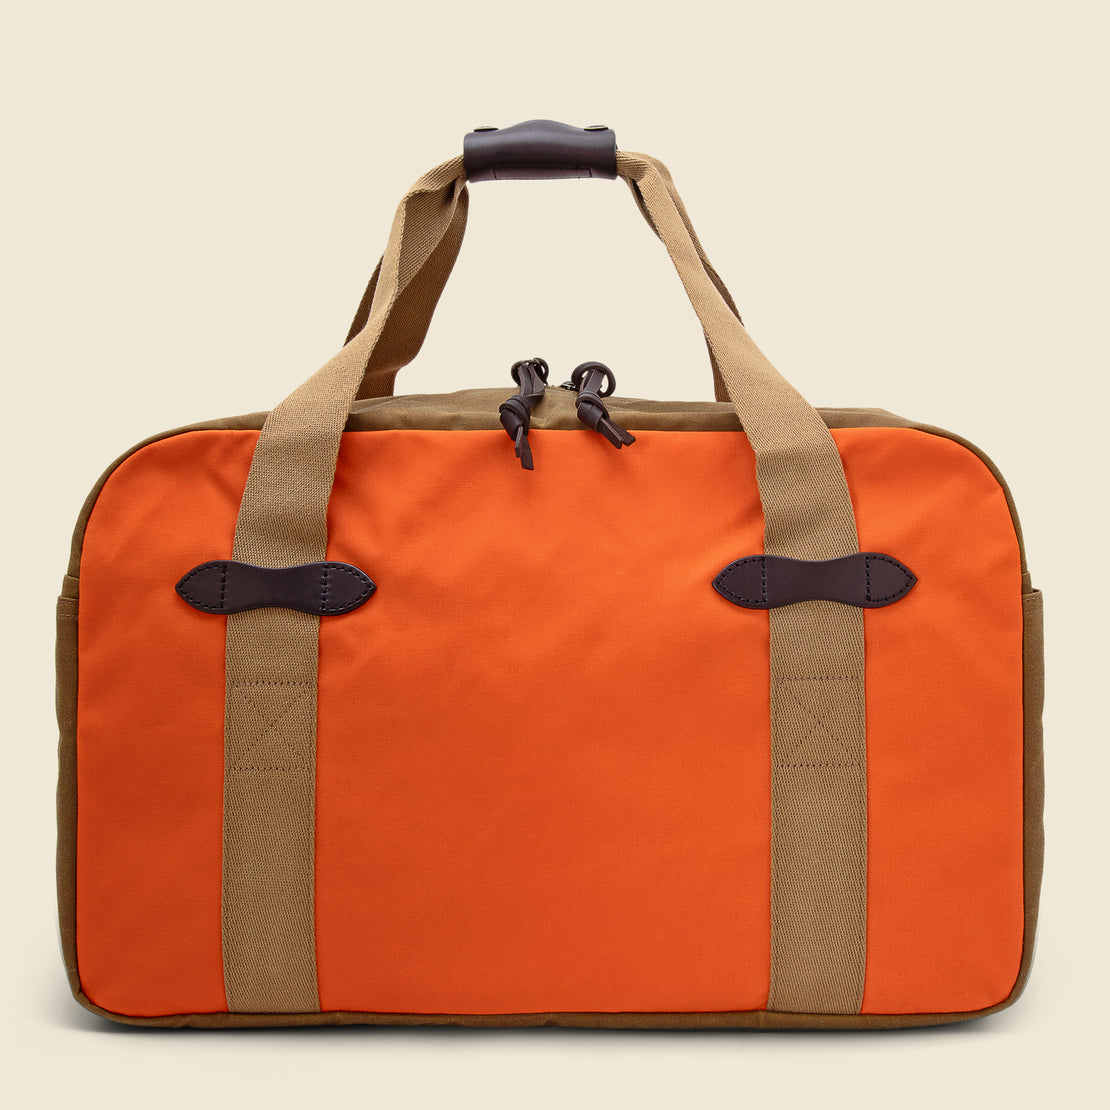 Tin Cloth Medium Duffle Bag - Flame/Dark Tan - Filson - STAG Provisions - Accessories - Bags / Luggage